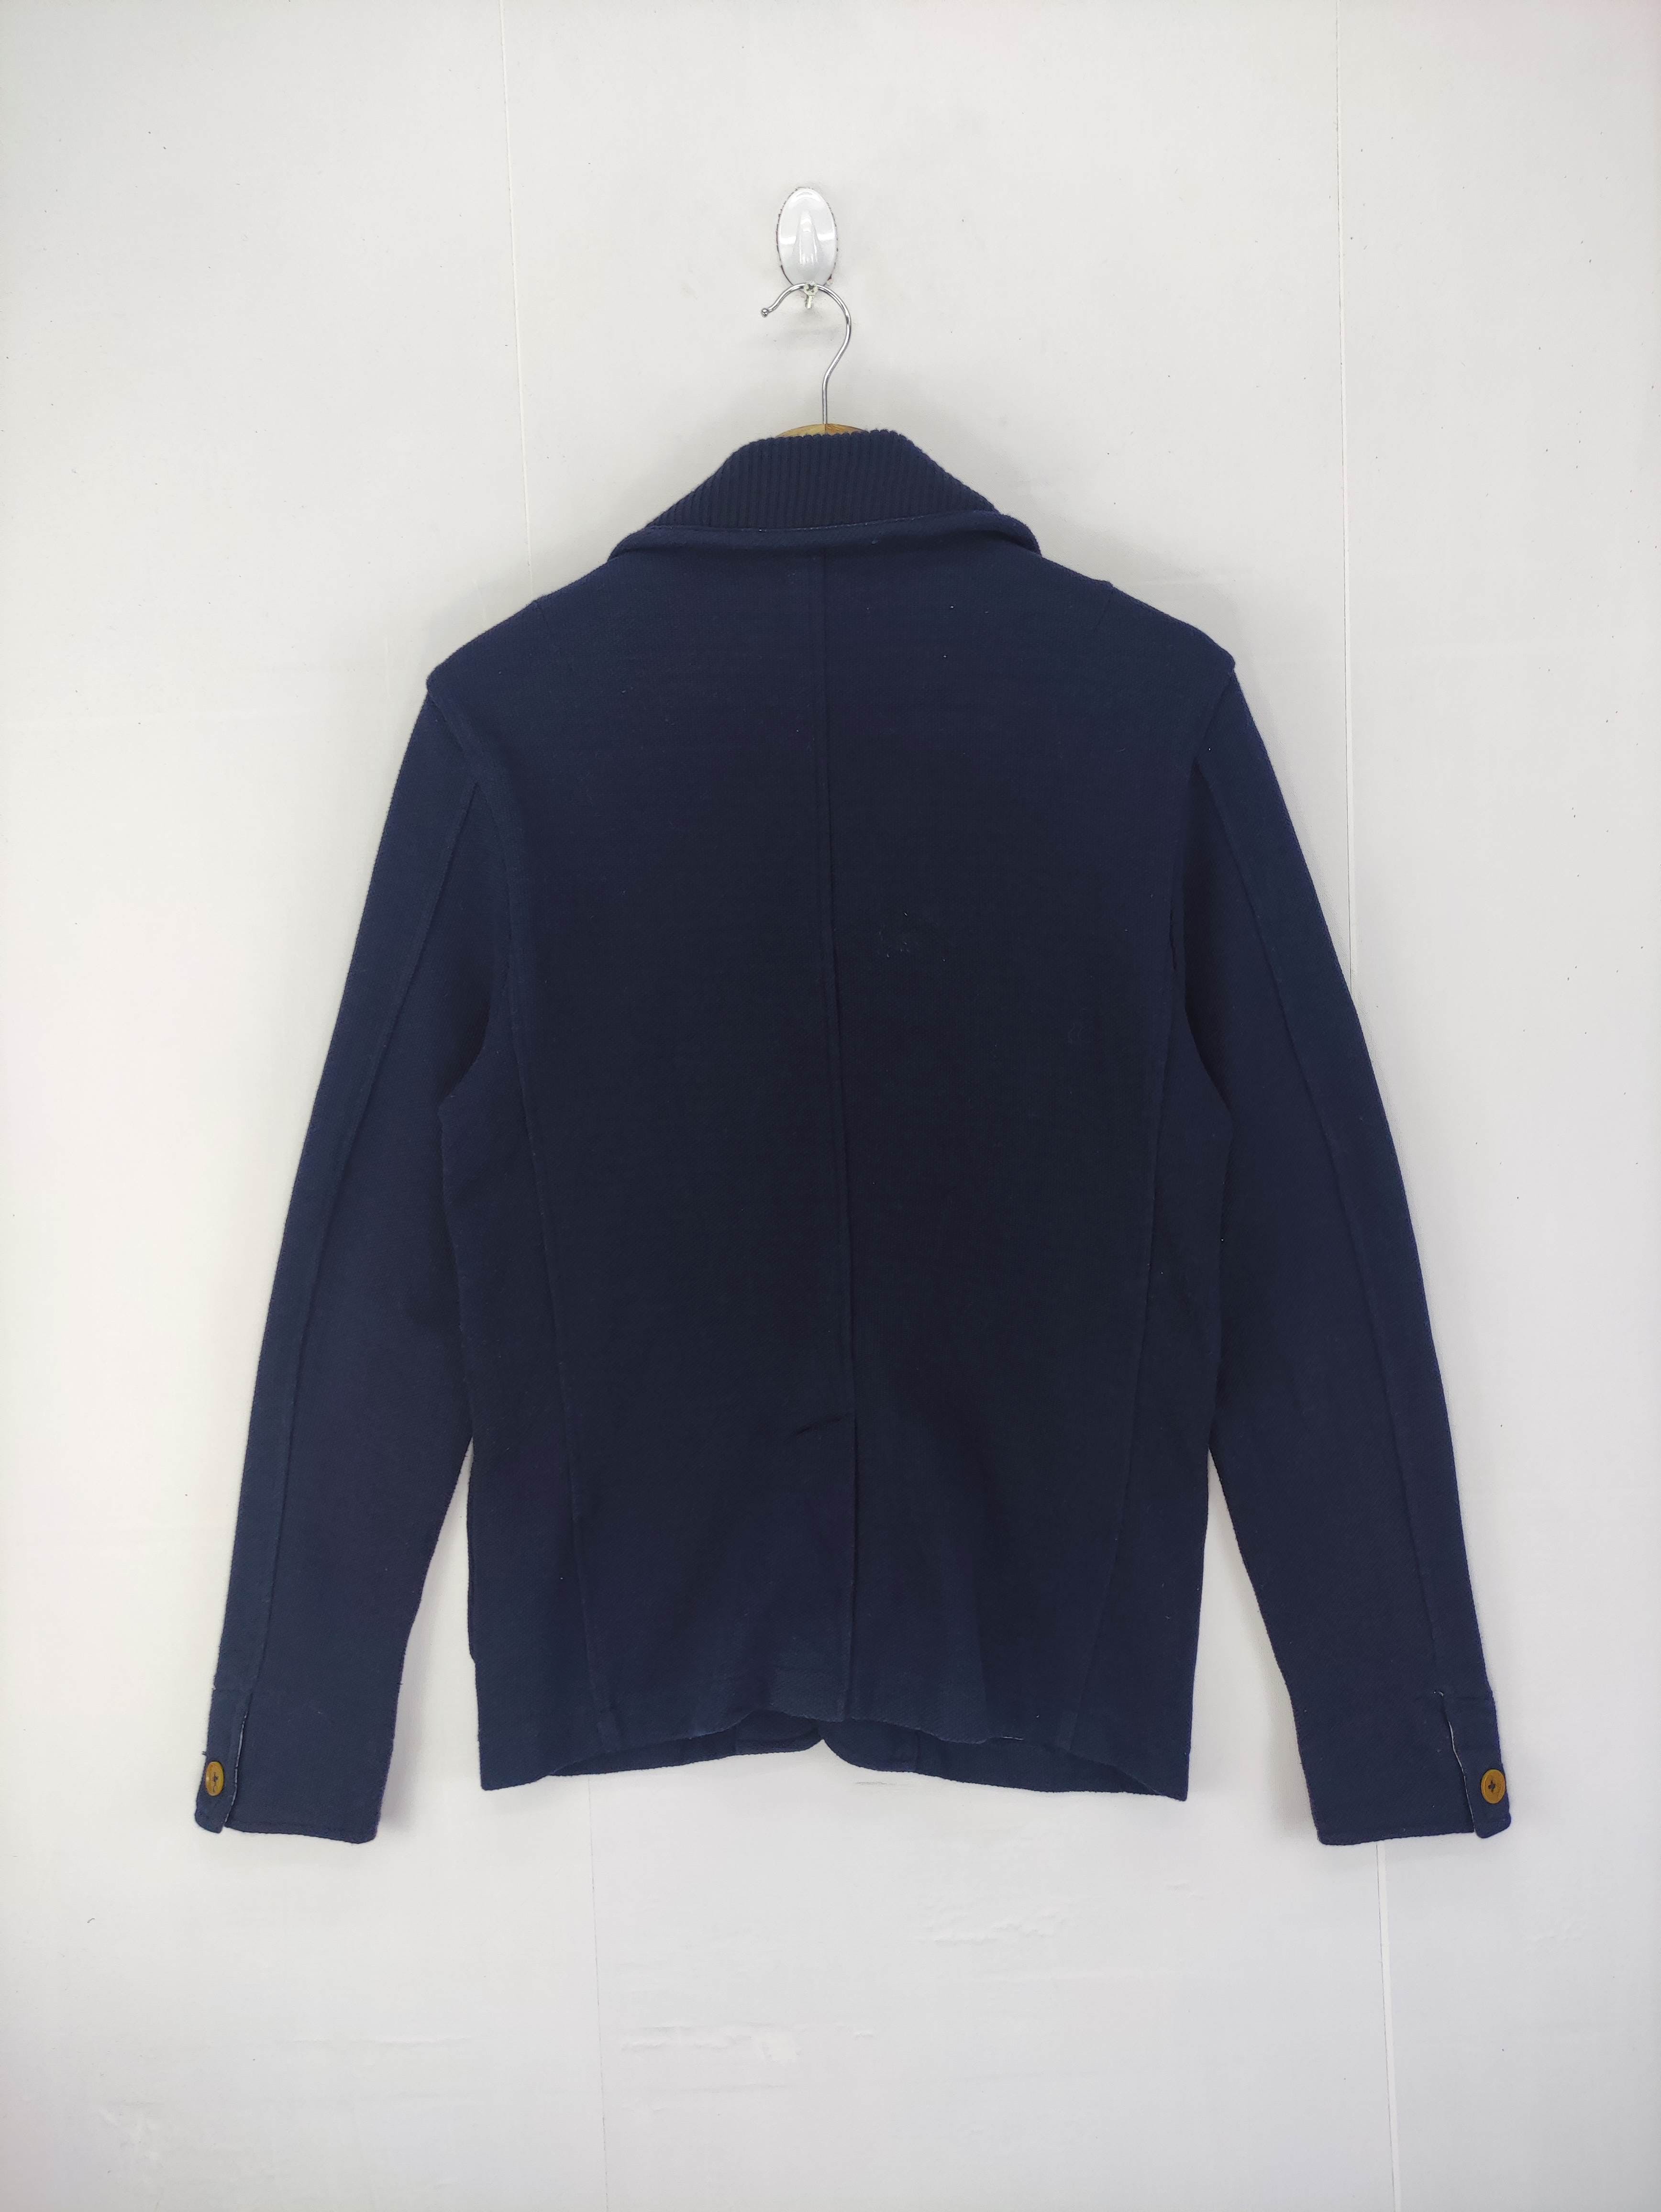 Vintage Takeo Kikuchi Shawl Collar Jacket - 6